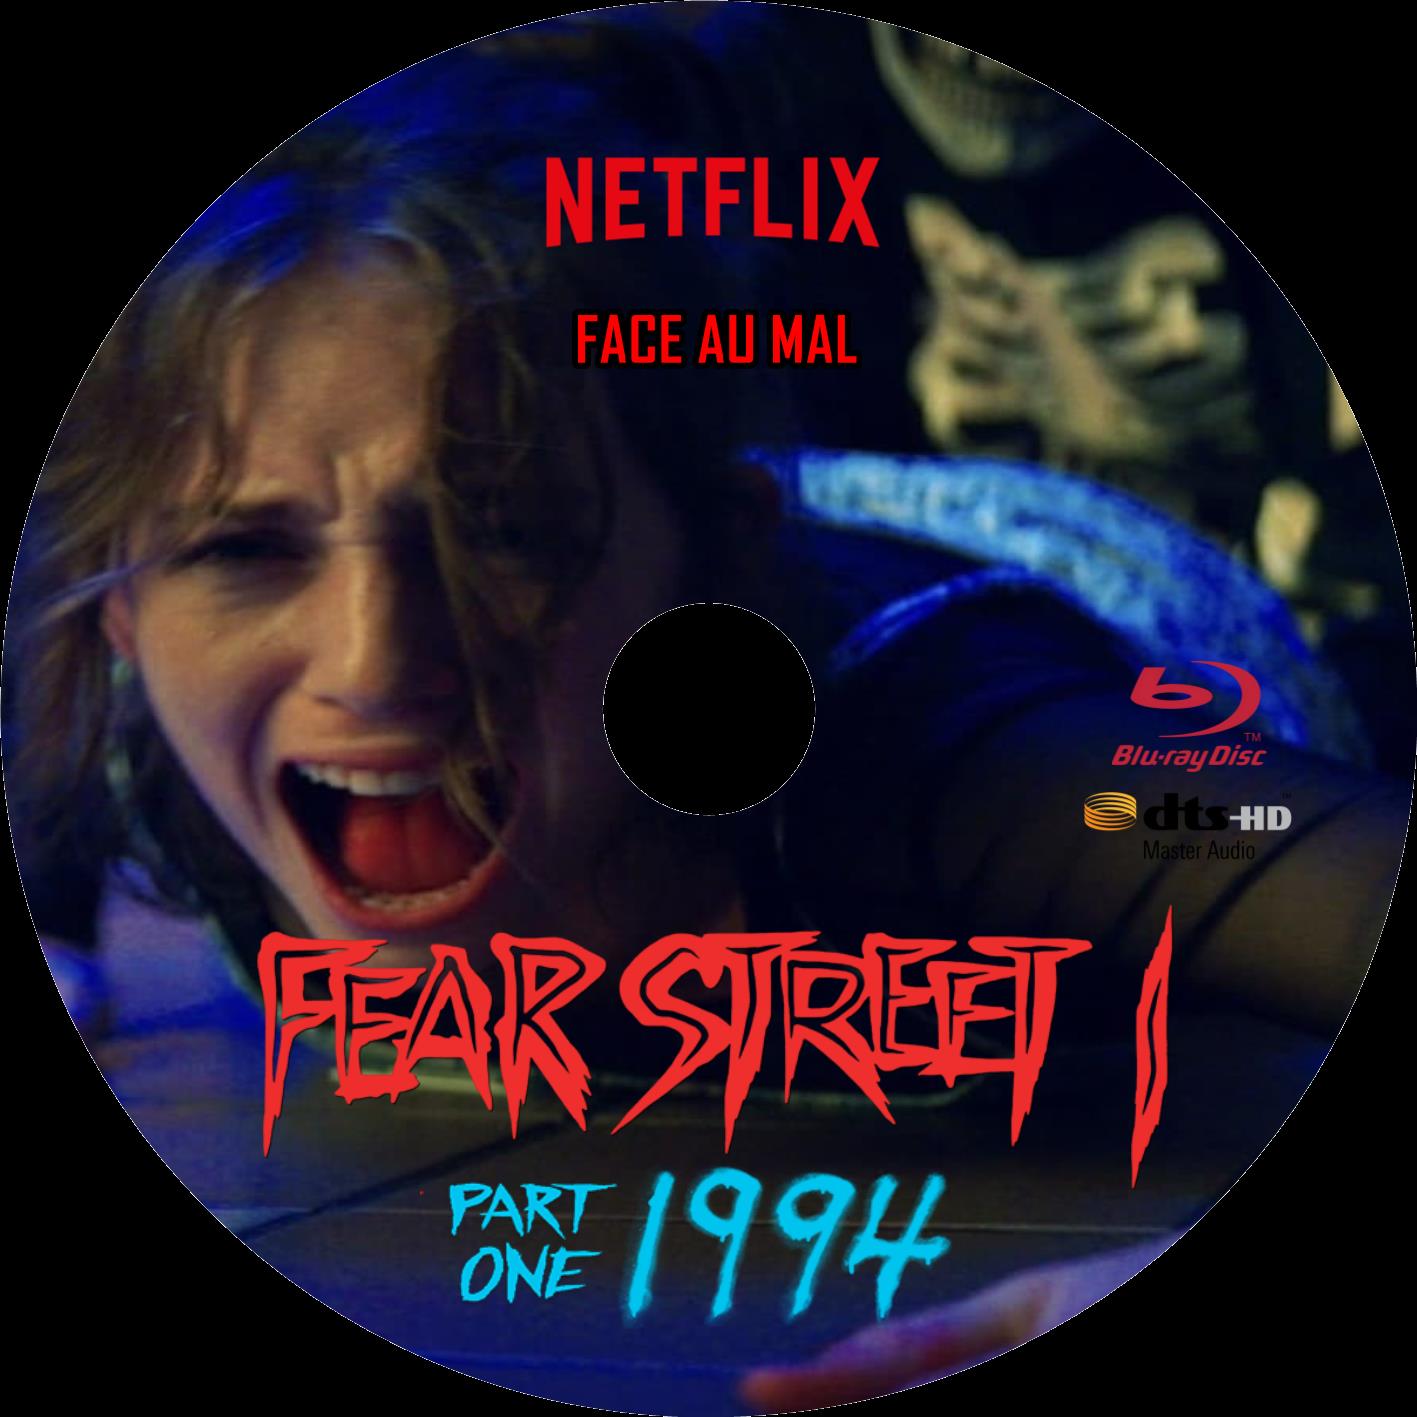 Fear street part 1 1994 custom (BLU-RAY)